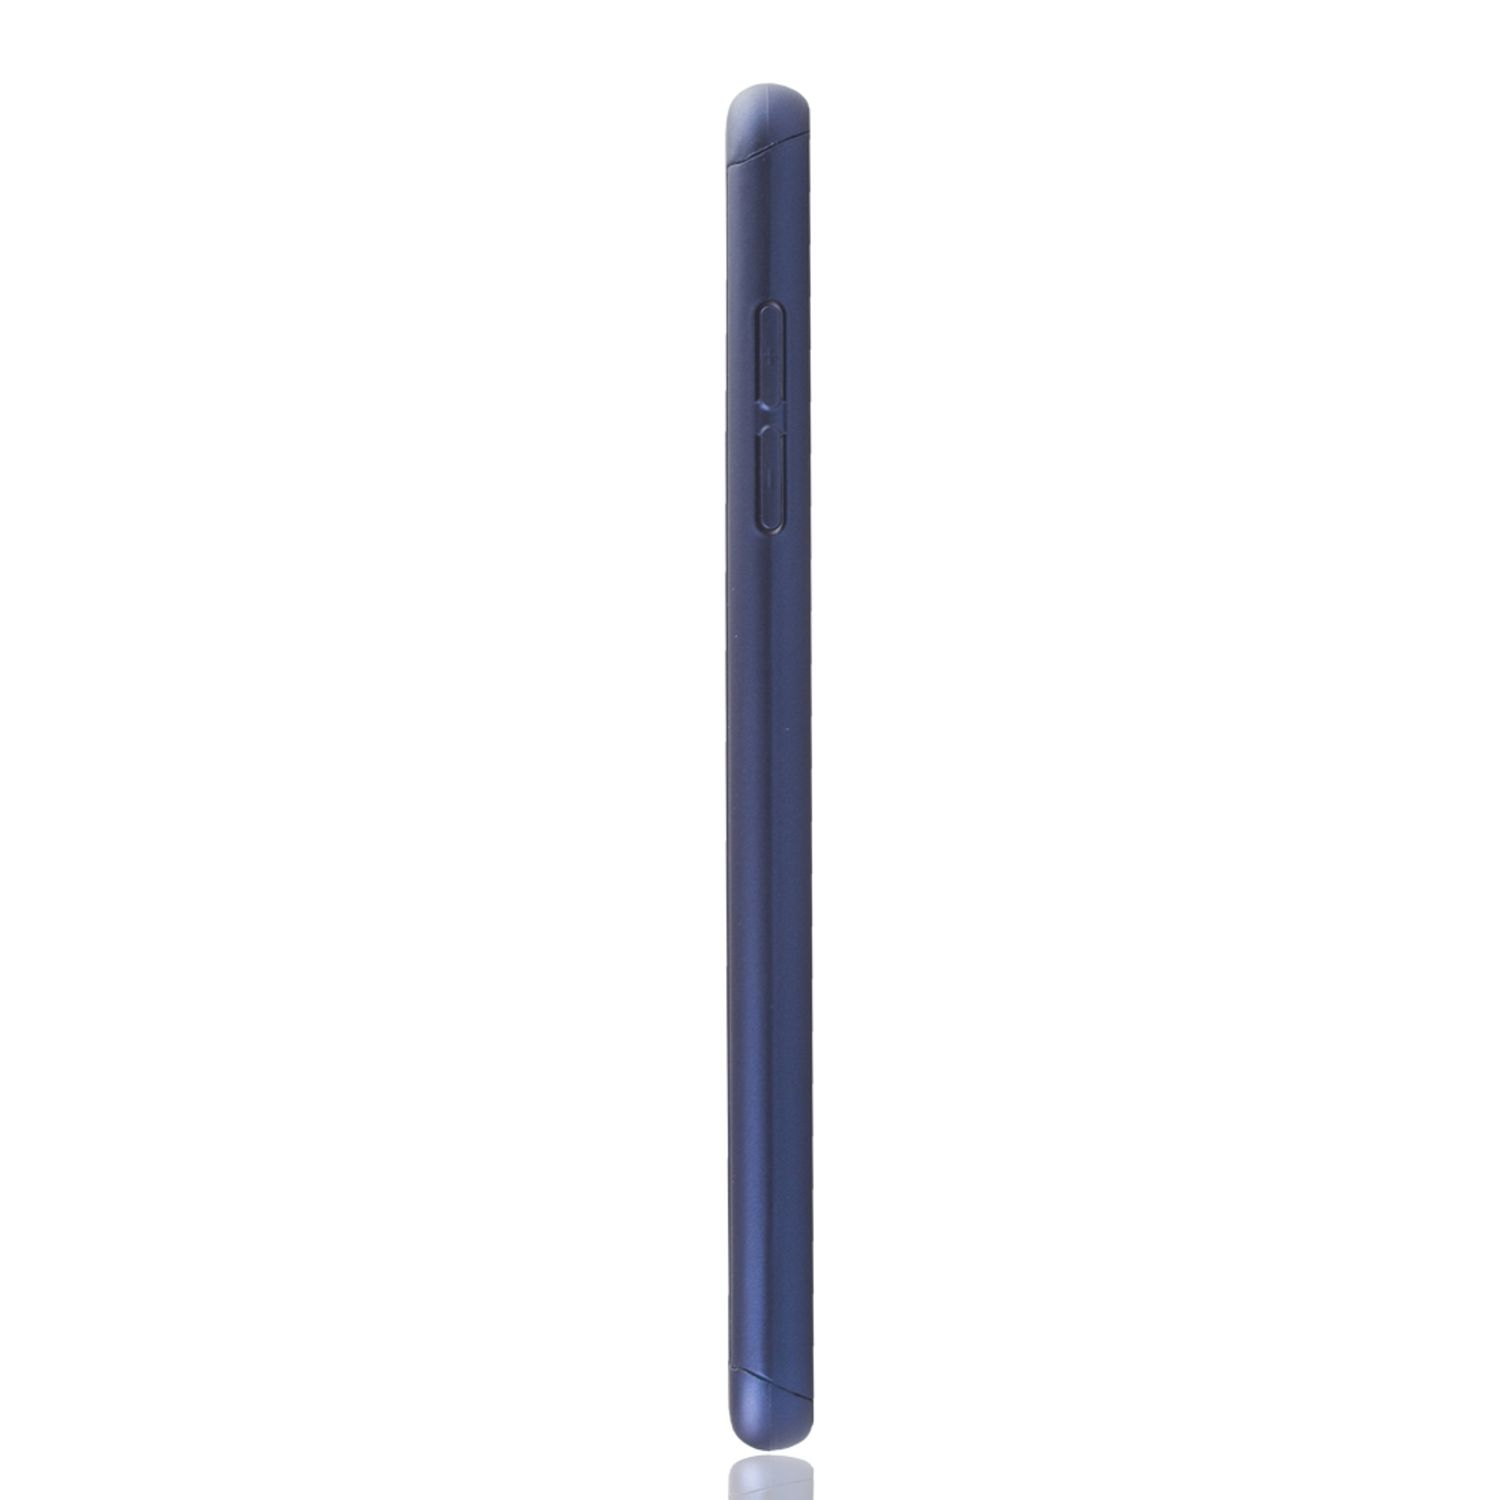 Plus DESIGN Blau Samsung, A6 Galaxy Schutzhülle, Cover, KÖNIG Full (2018),